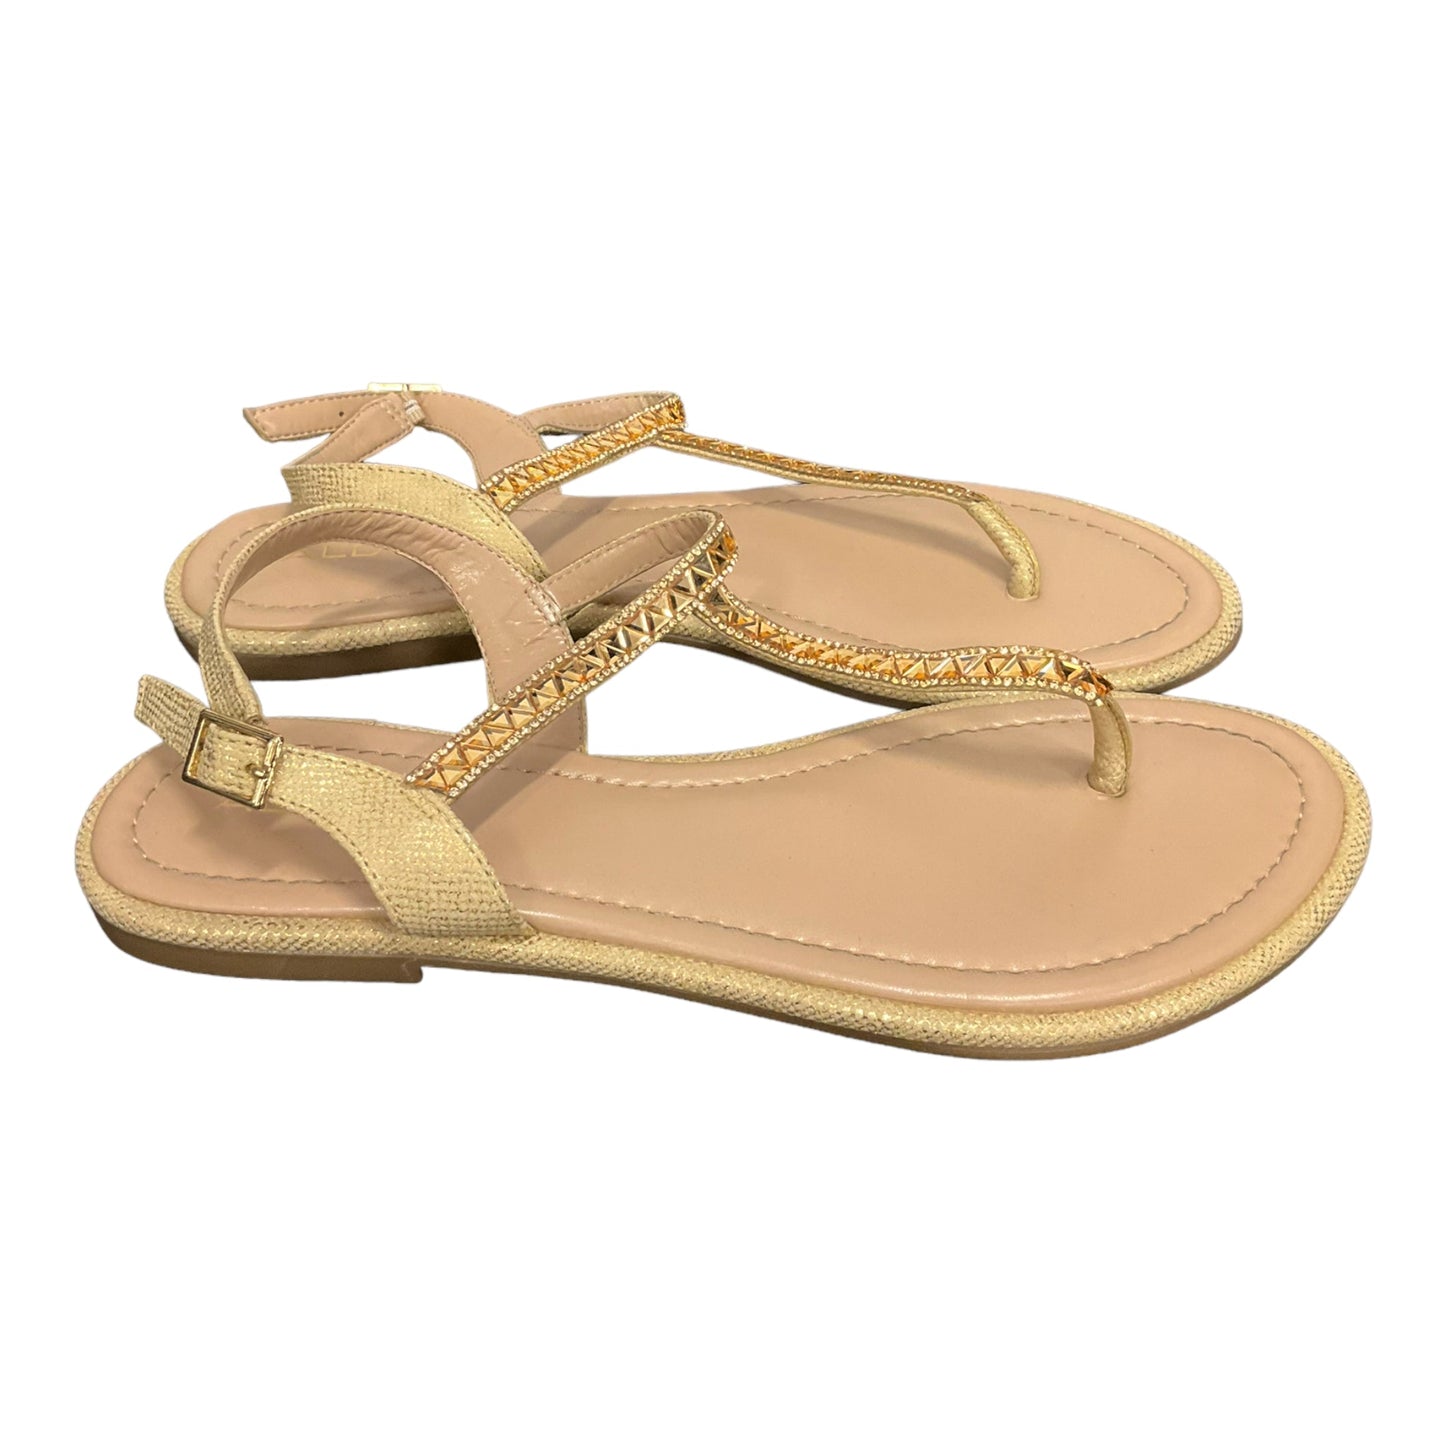 Sandals Flats By Aldo  Size: 10